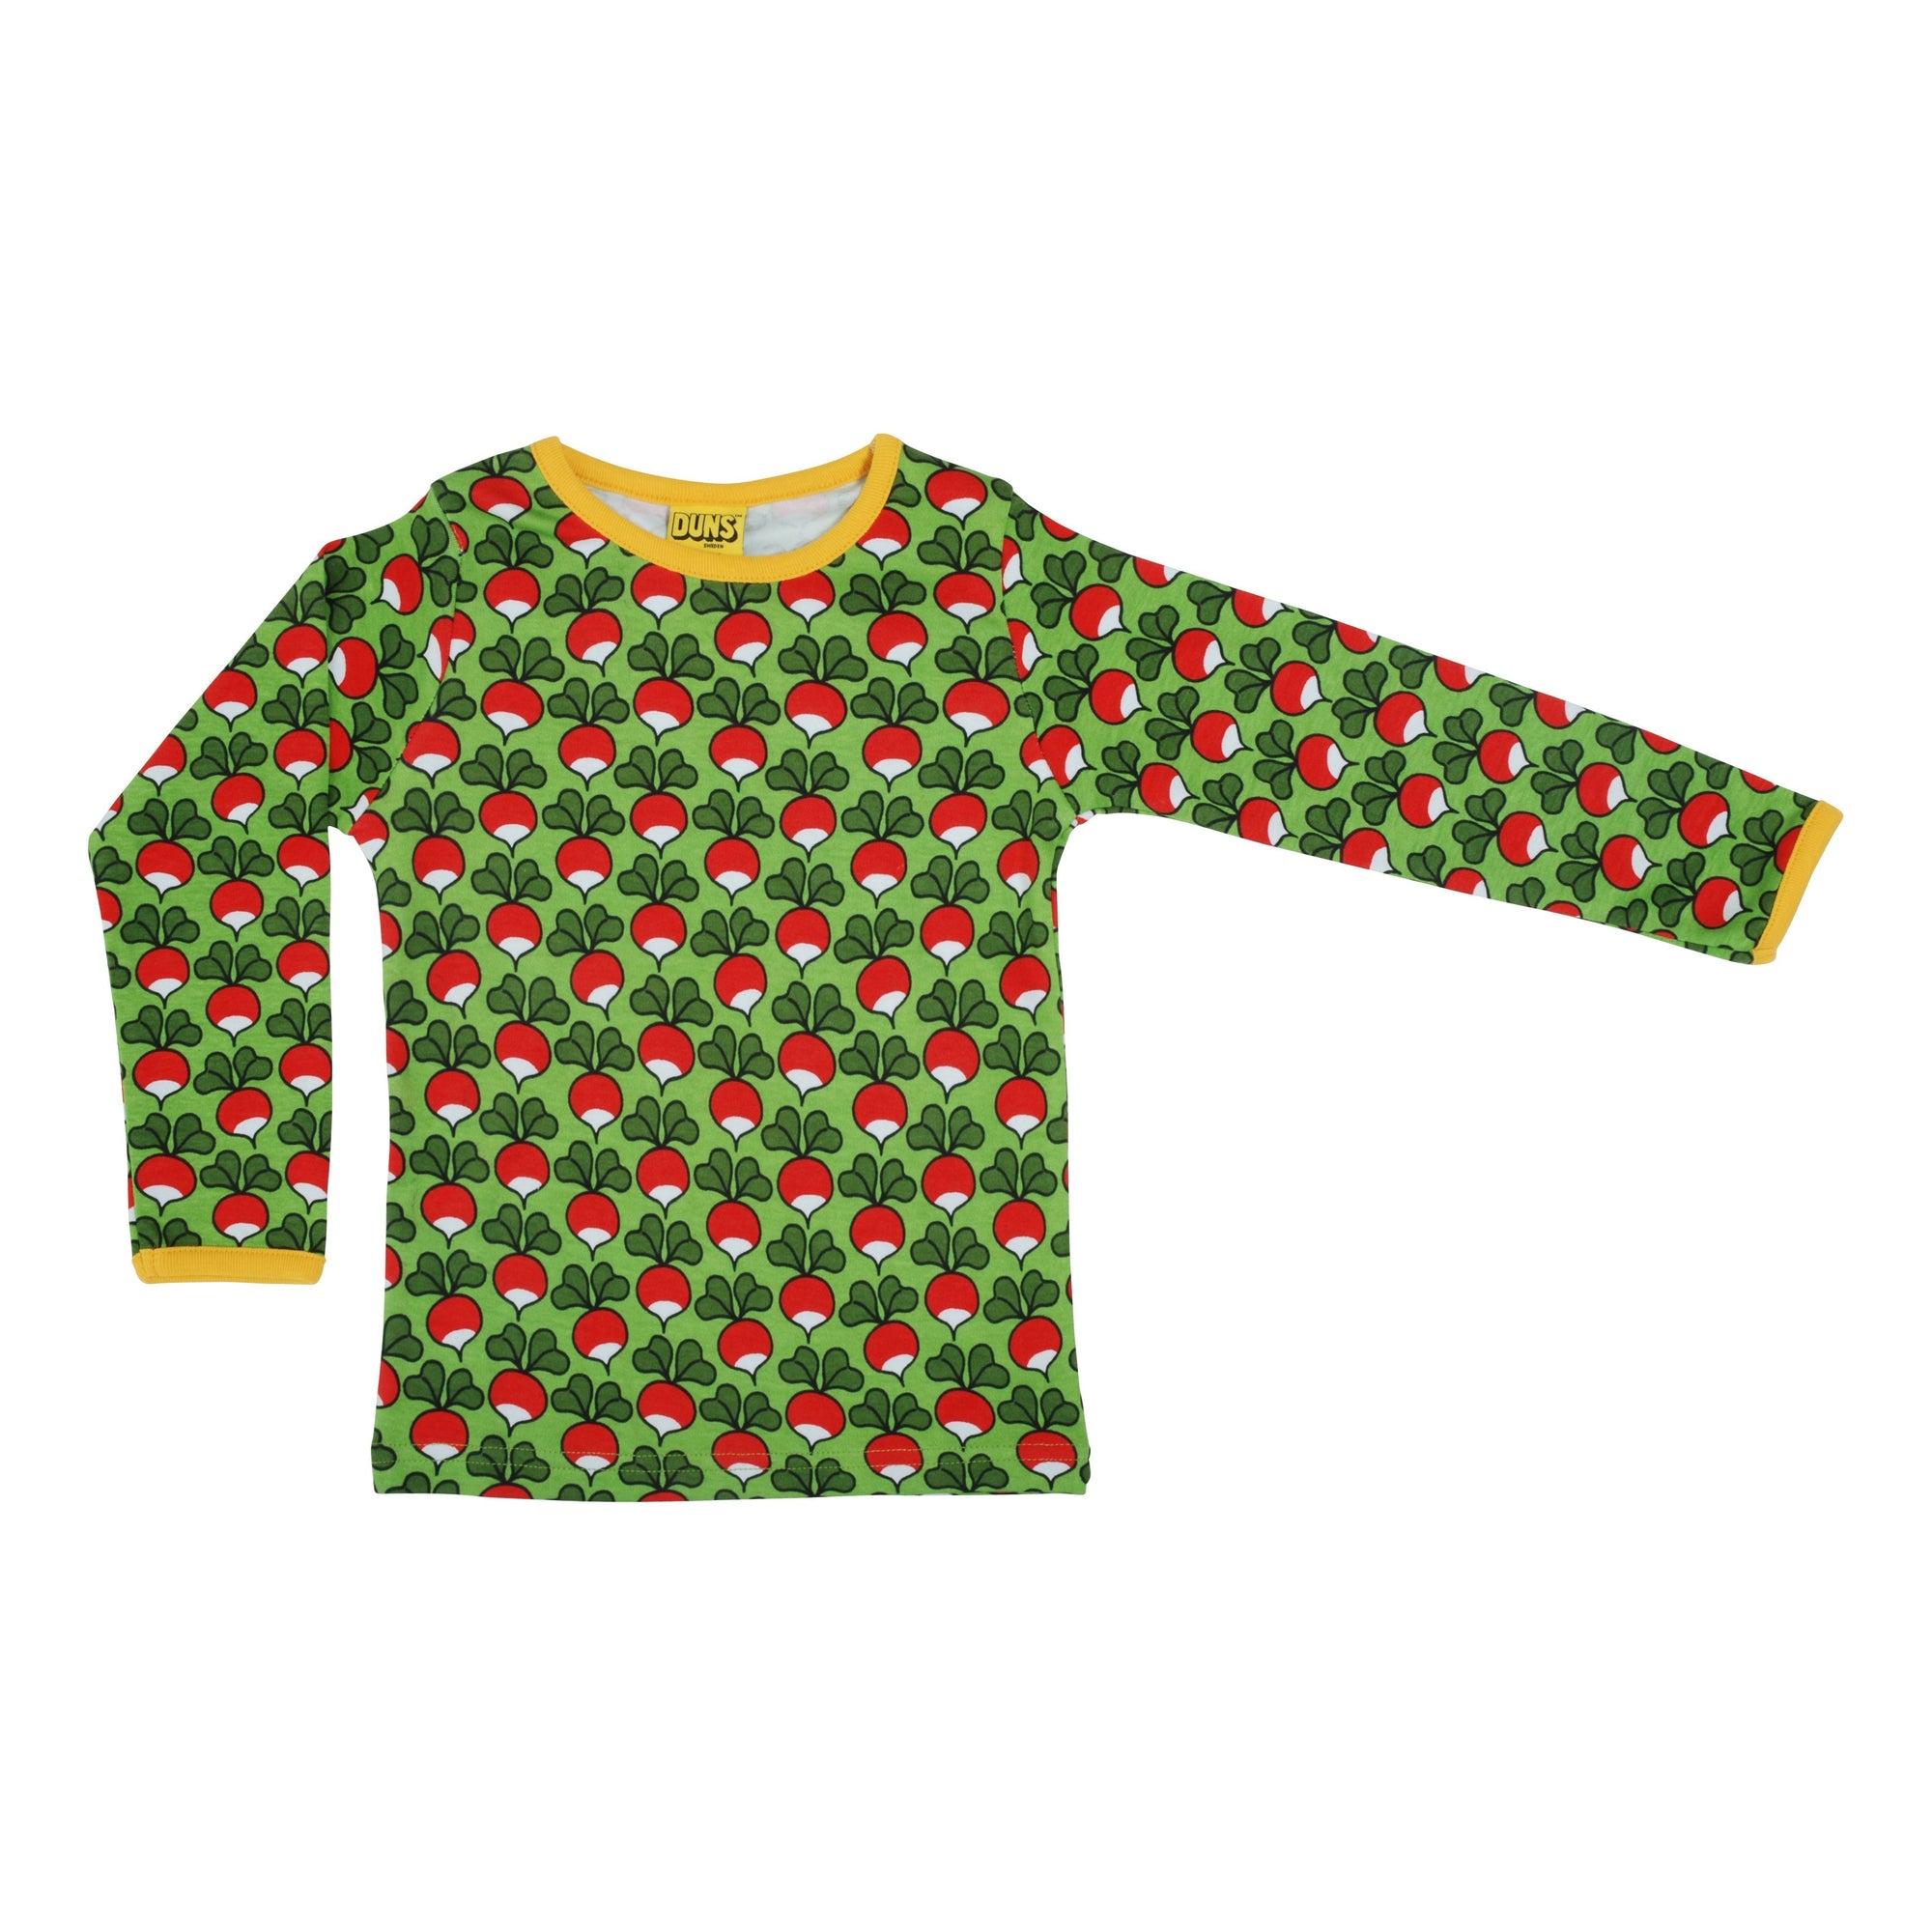 Adult's Radish - Foliage Green Long Sleeve Shirt - 2 Left Size S & M-Duns Sweden-Modern Rascals